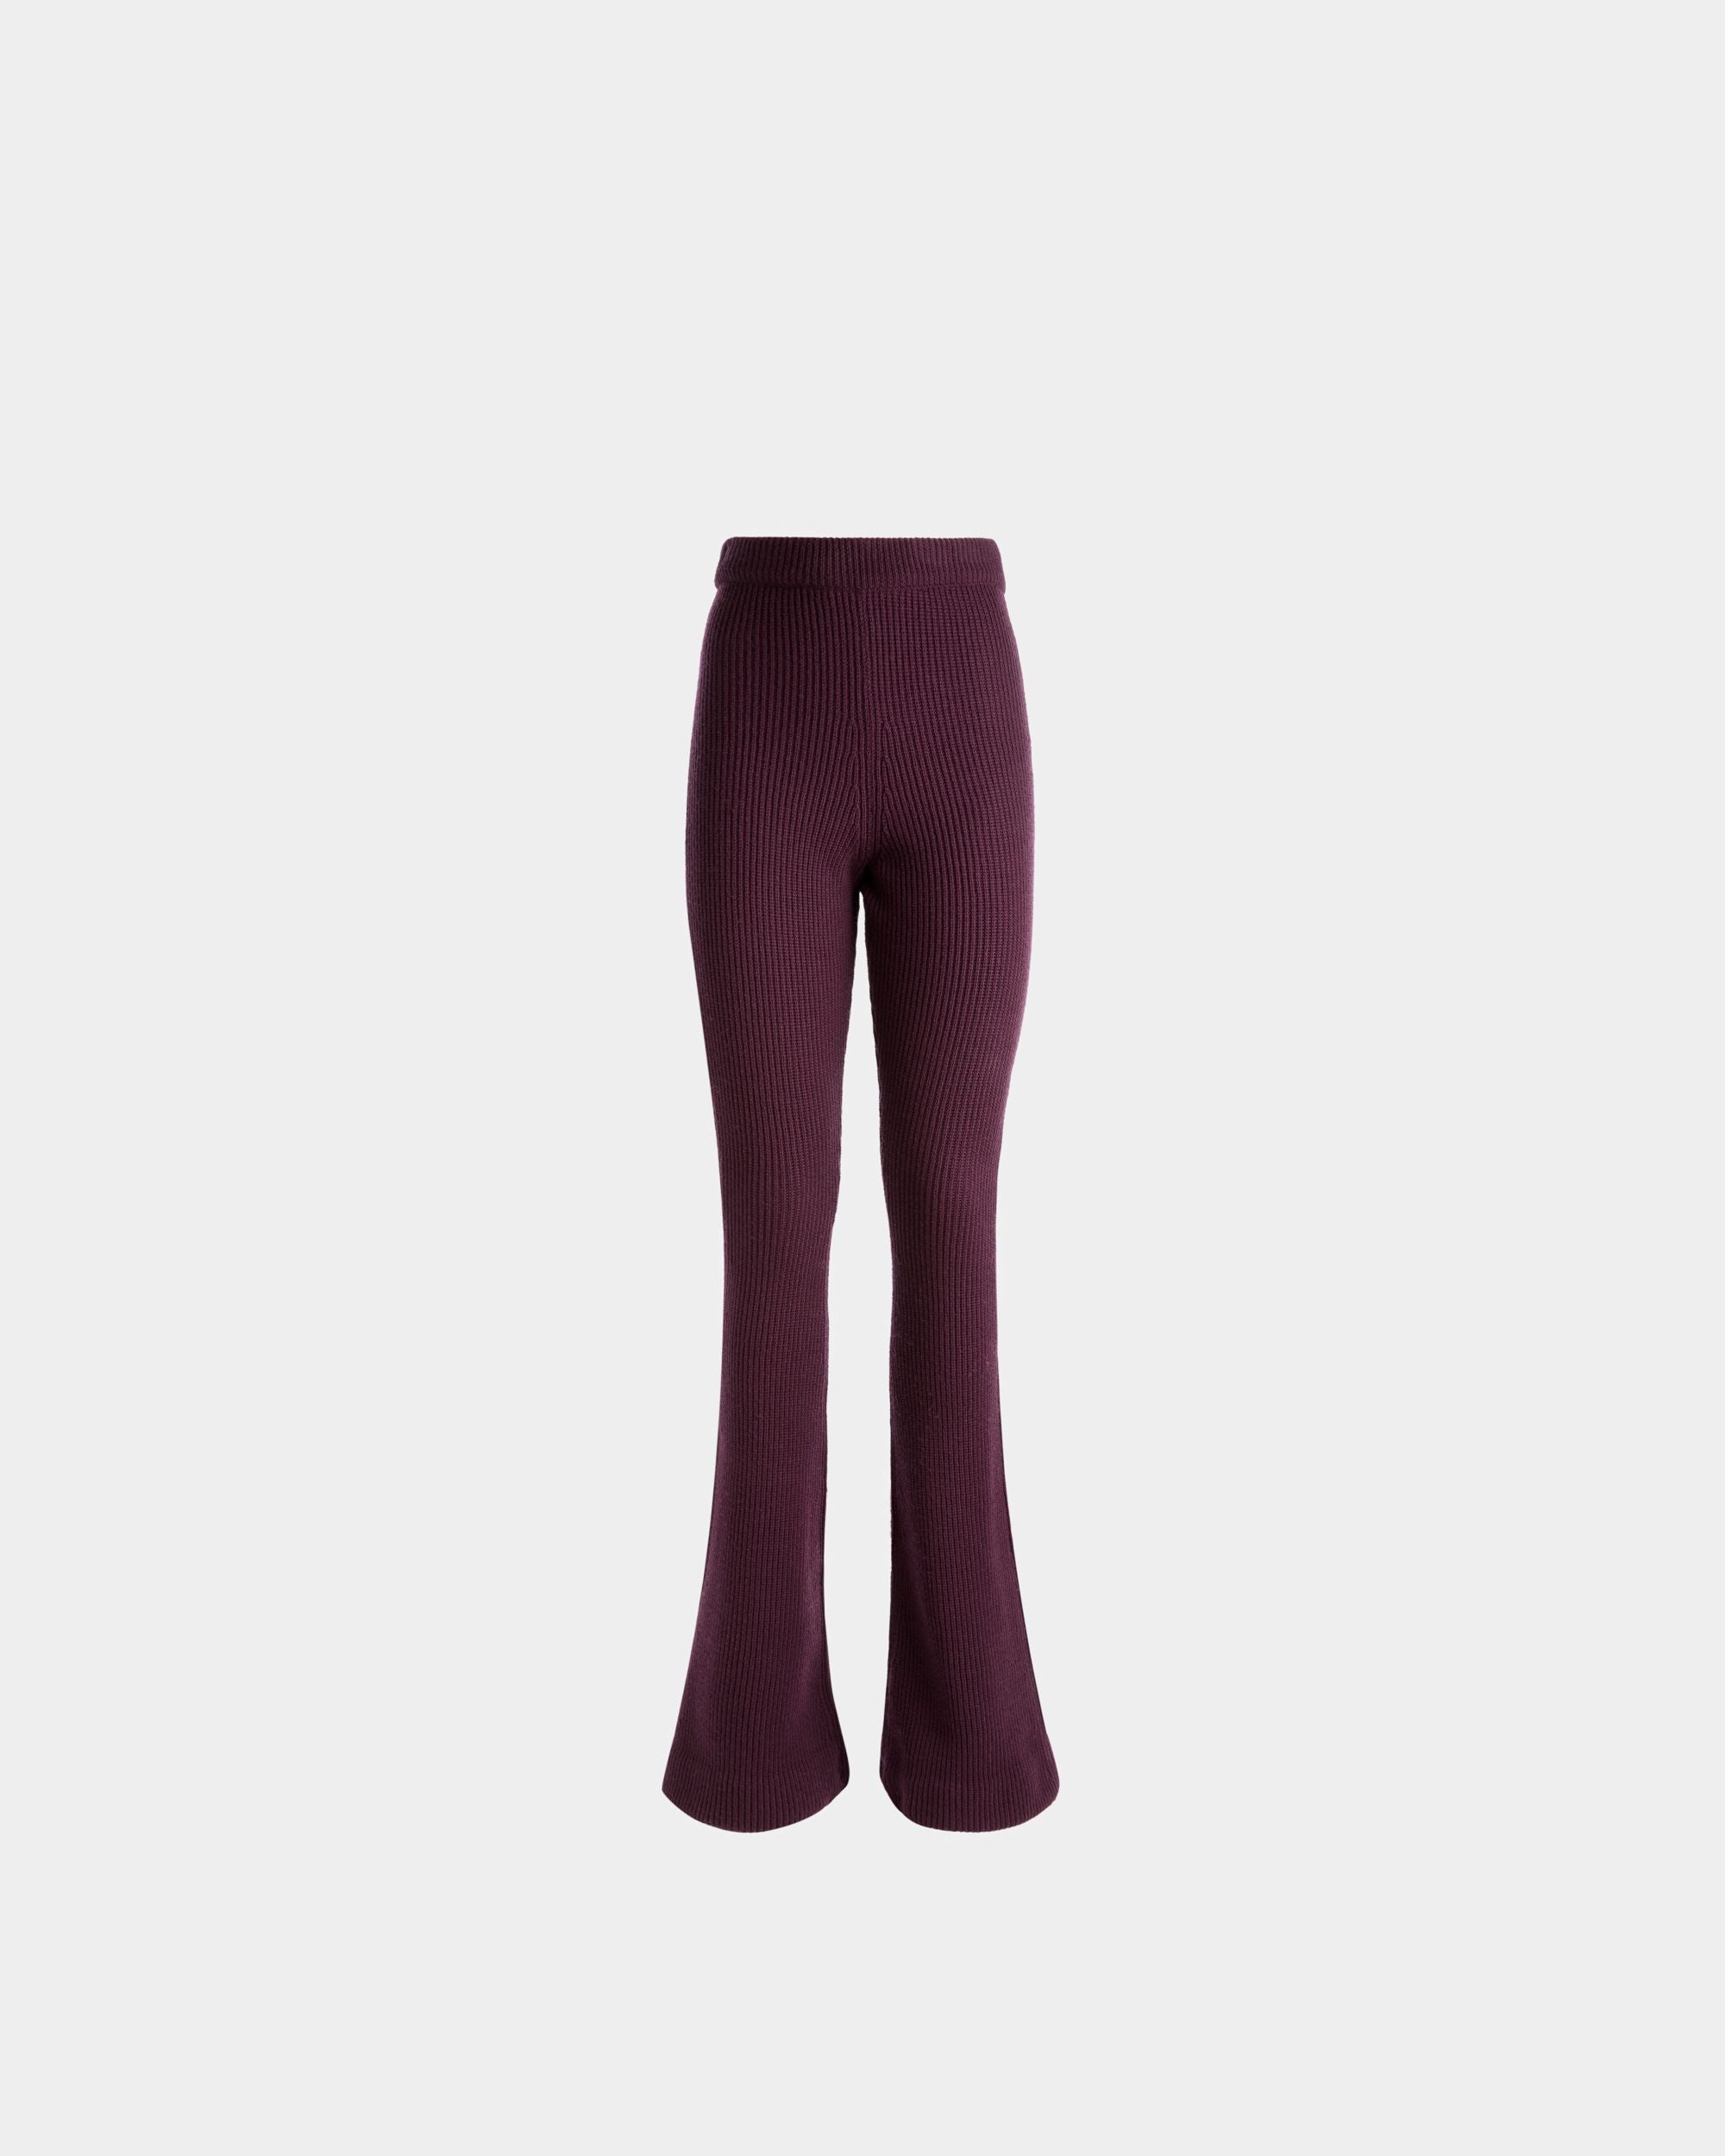 Flared Trousers | Women's Bottoms | Purple Wool | Bally | Still Life Front